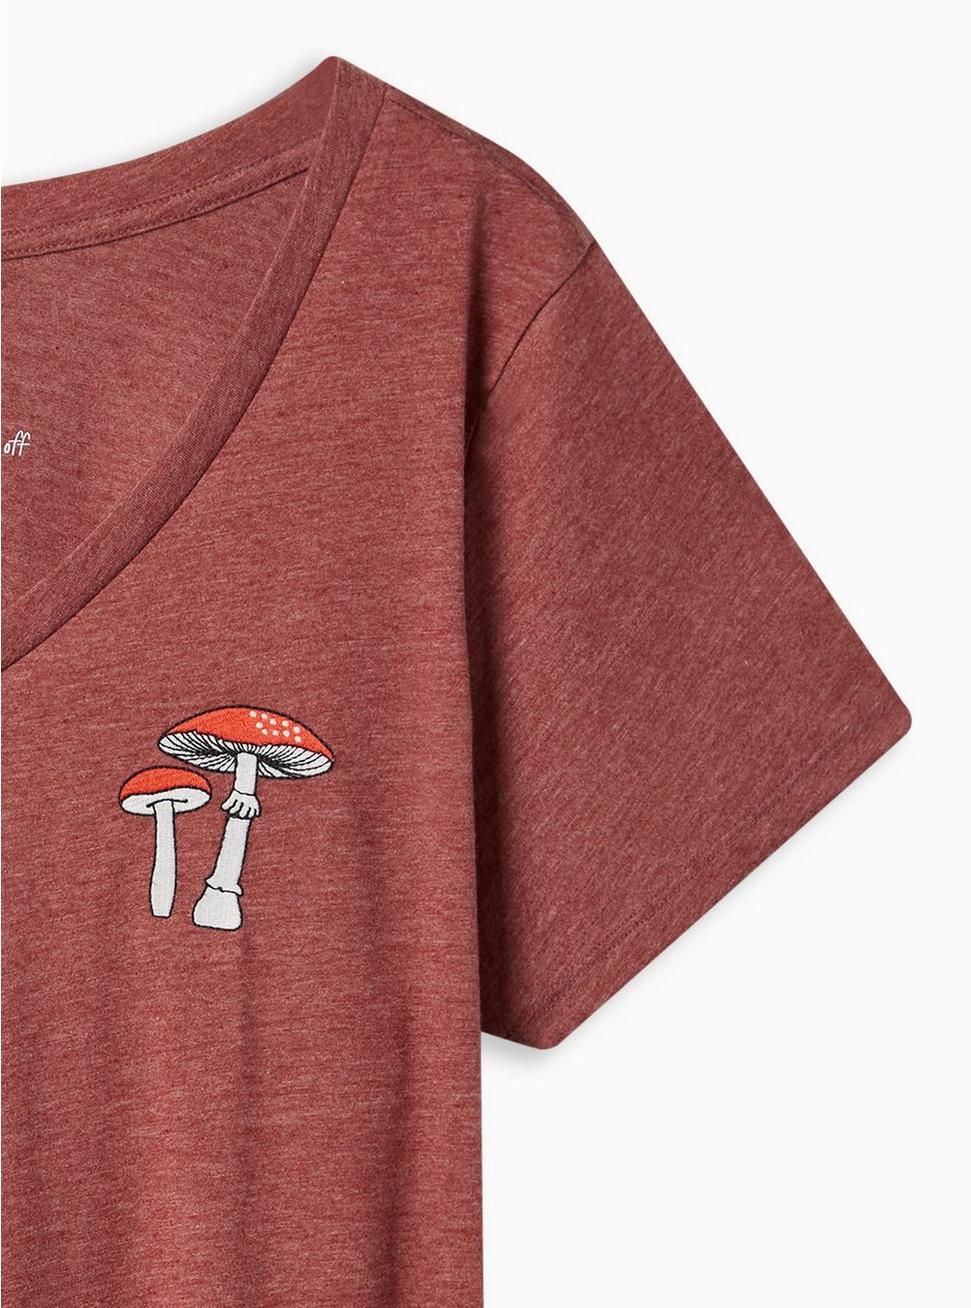 Plus Size Mushroom Girlfriend Signature Jersey V-Neck Embroidery Tee, BROWN, alternate